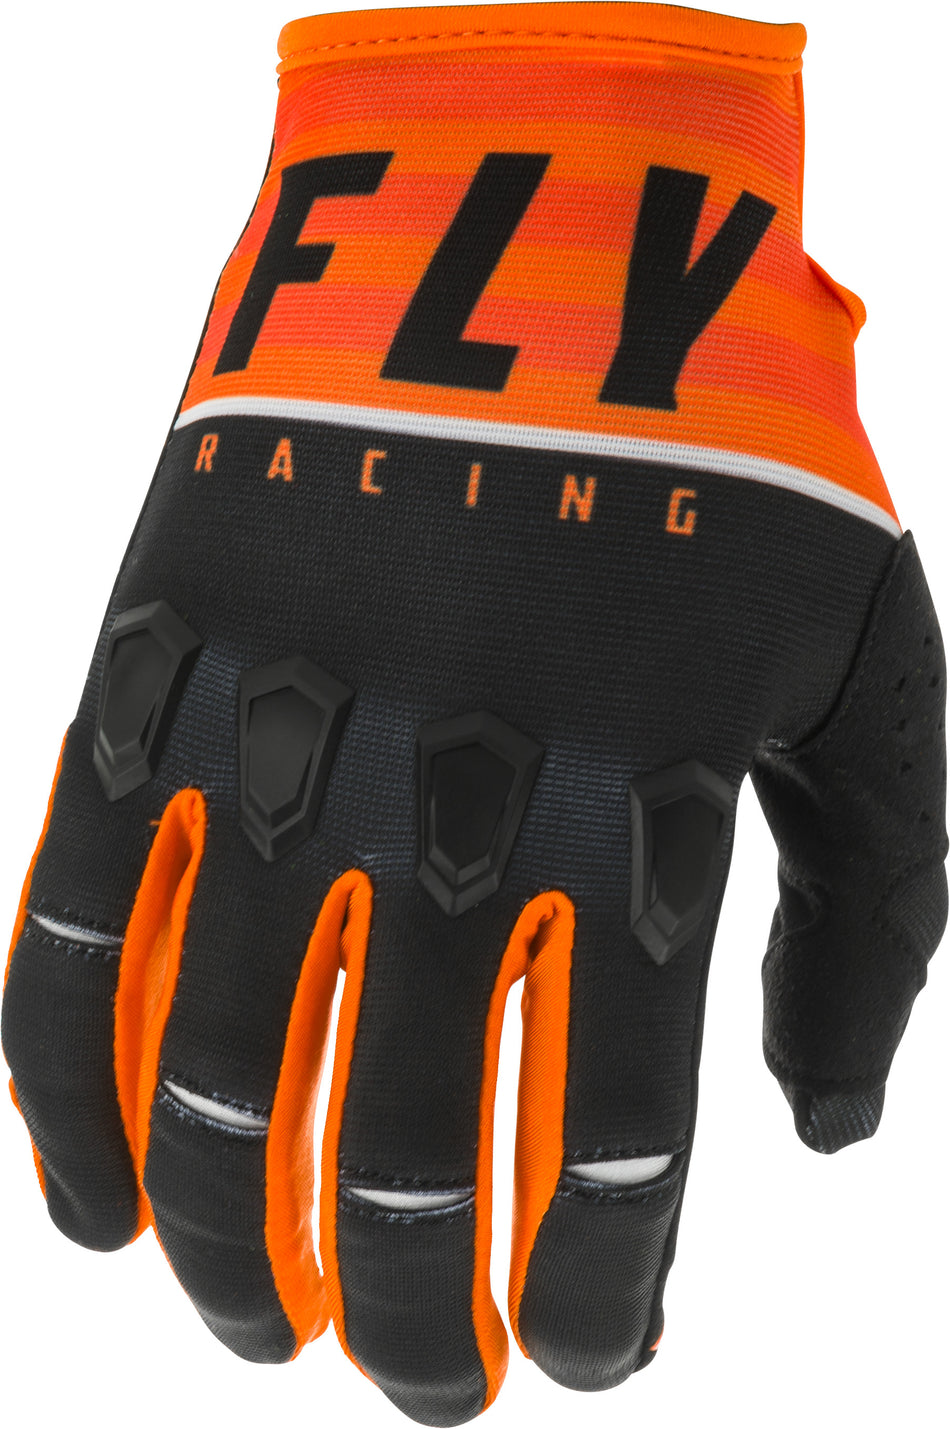 FLY RACING Kinetic K120 Gloves Orange/Black/White Sz 08 373-41708